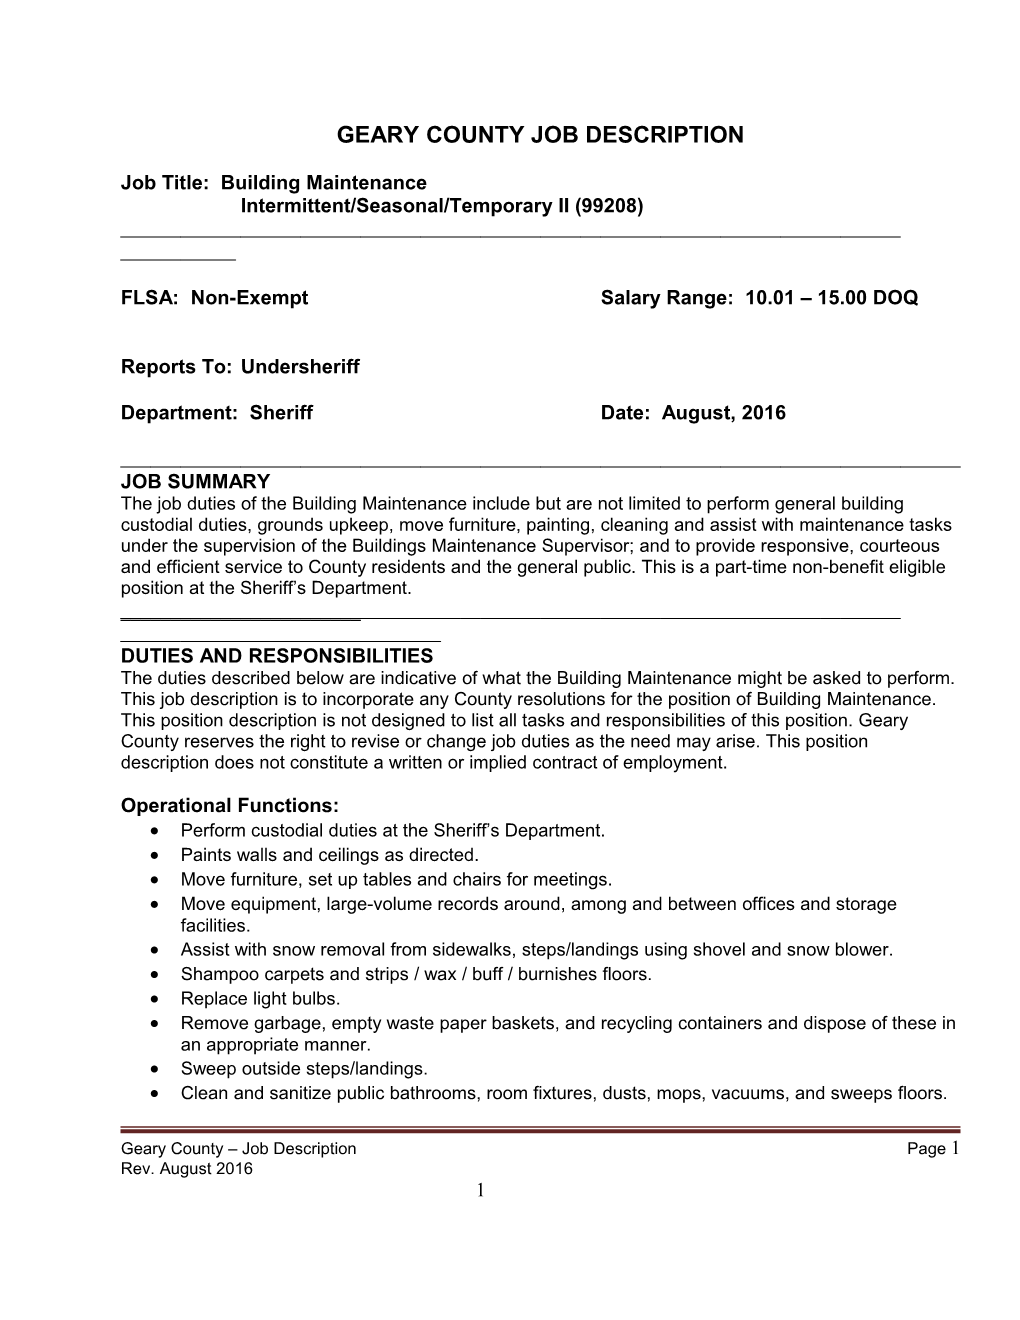 Geary County Job Description s4